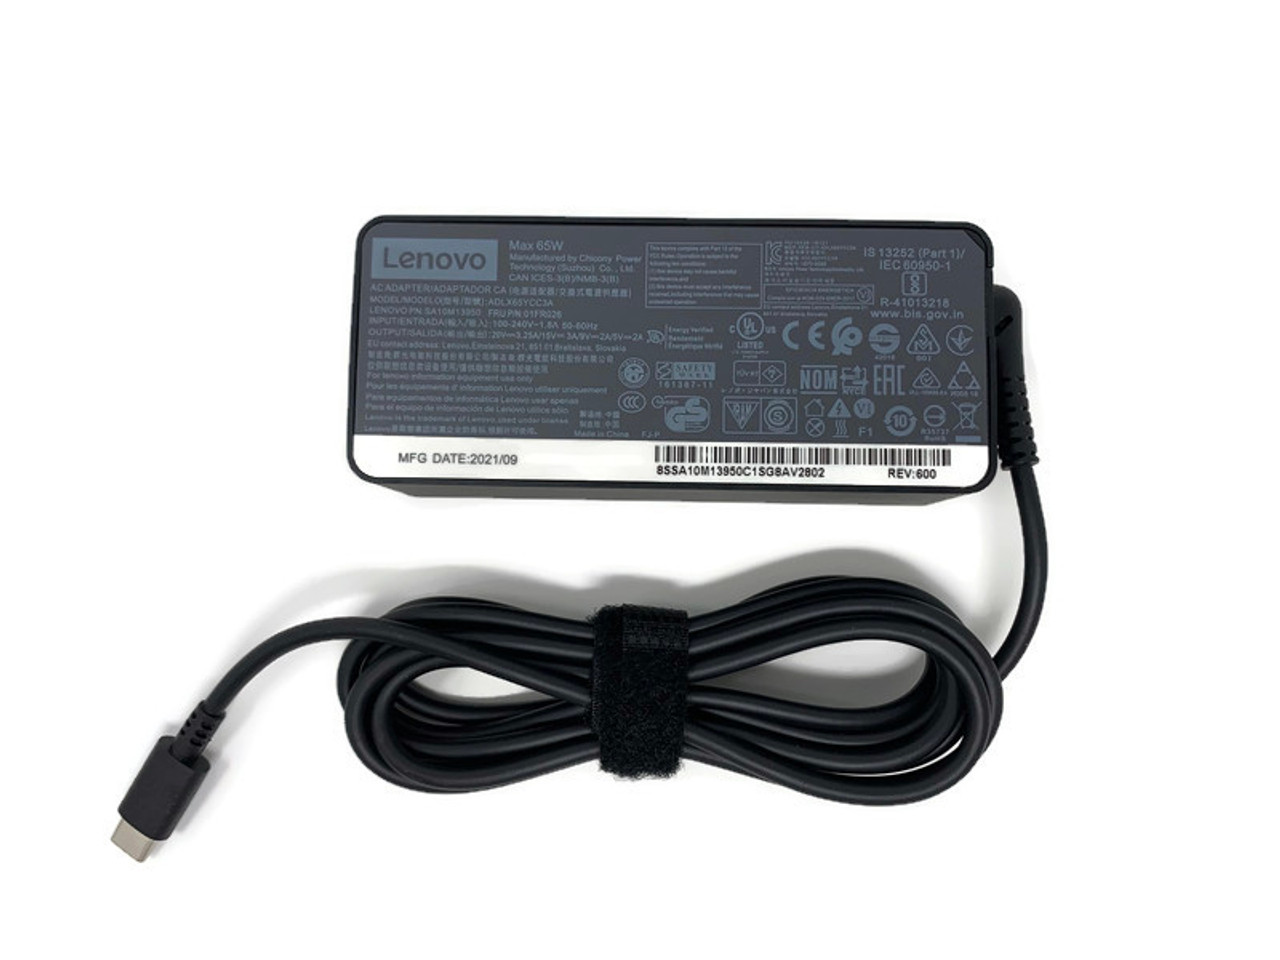 Lenovo 65W USB-C AC Adapter (w/Cord) - Minnesota Memory - Chromebook  Solutions